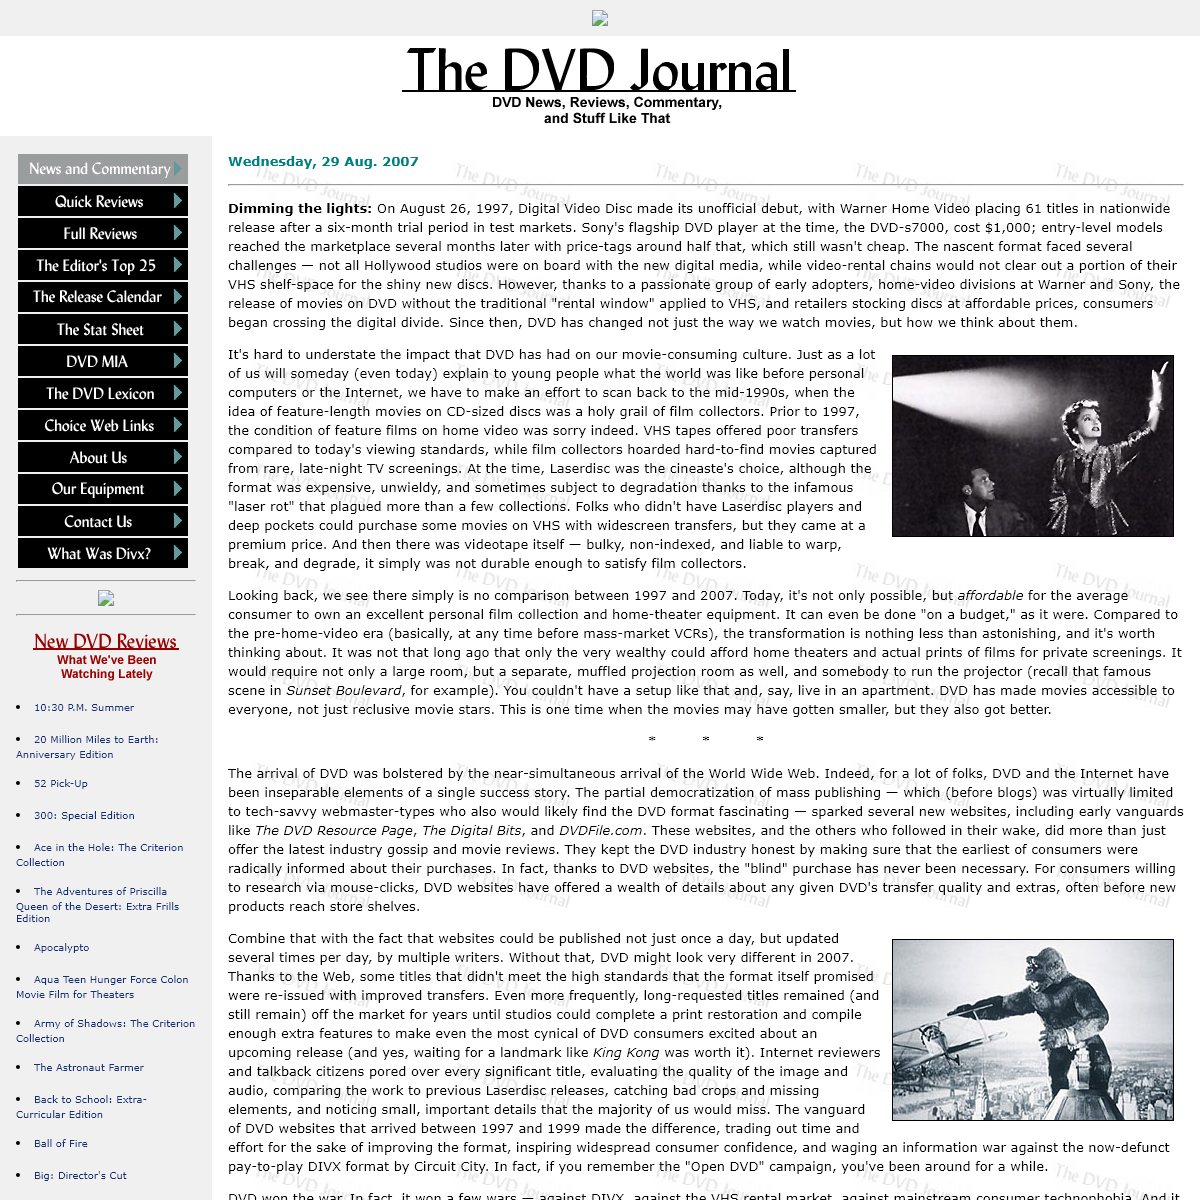 A complete backup of dvdjournal.com